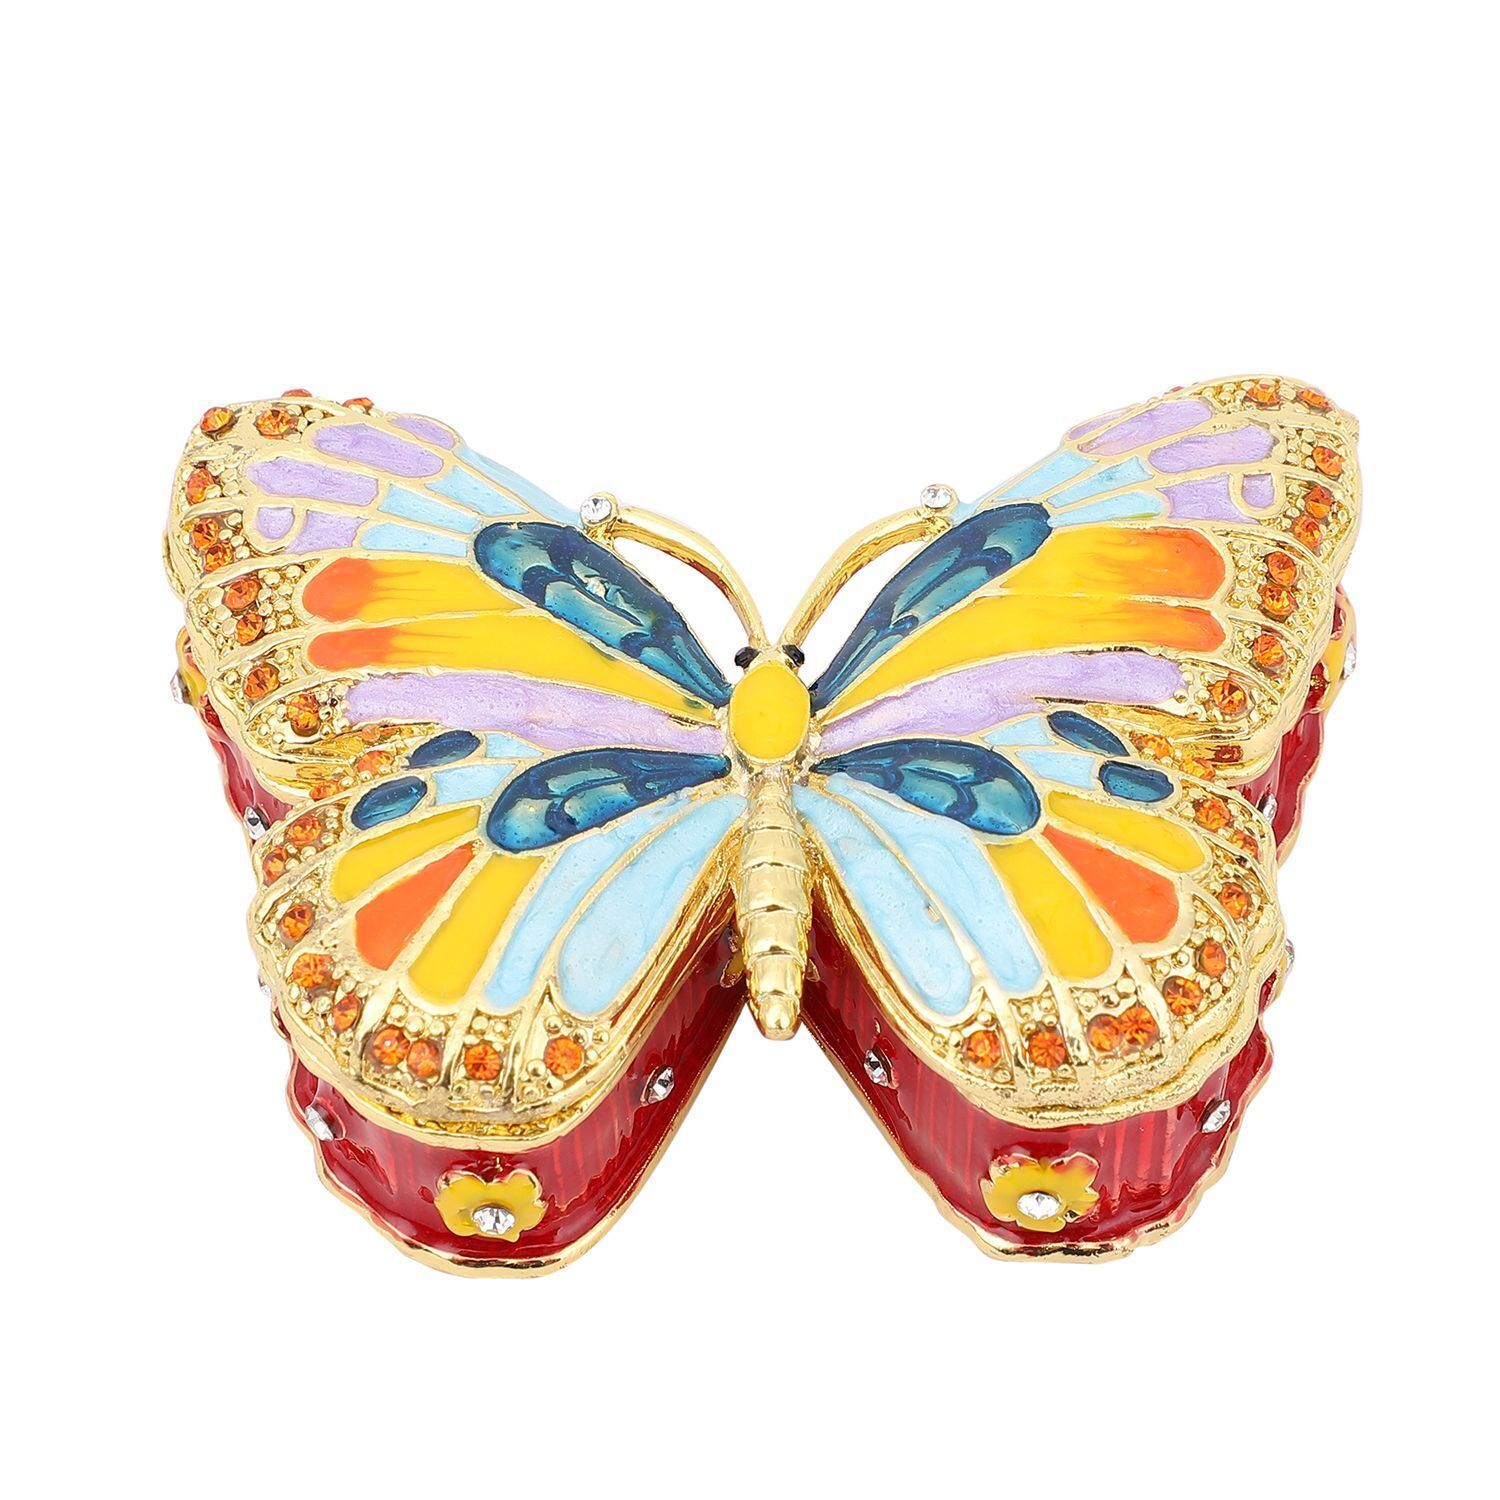 Jewelry Box Crystal Enameled Butterfly Trinket Box Organizer in Dualtone Gifts